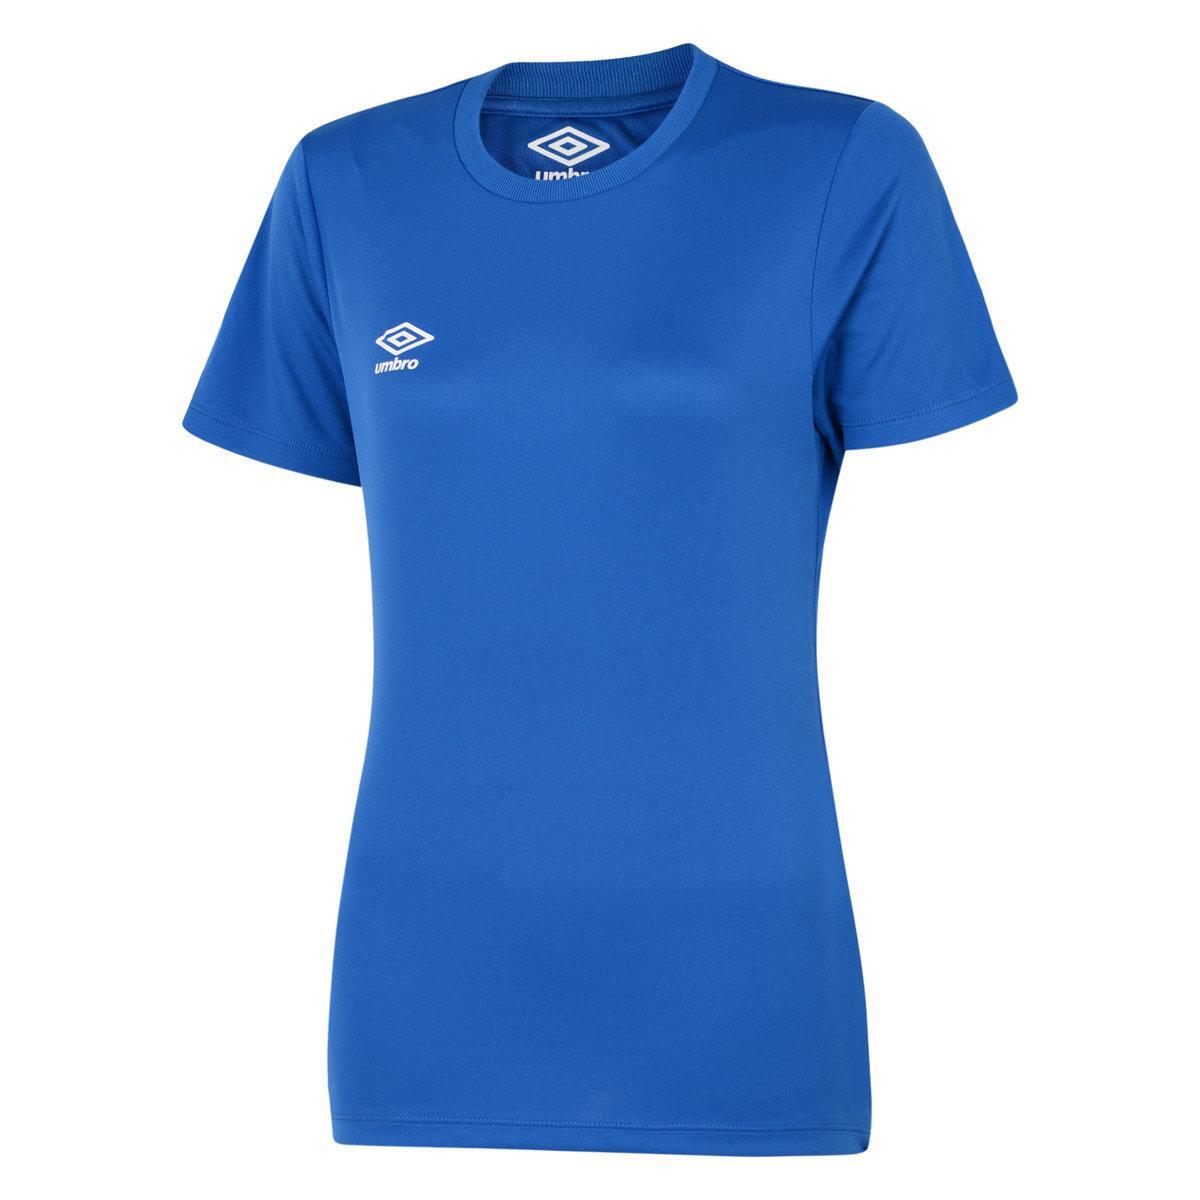 UMBRO Womens/Ladies Club Jersey (Royal Blue/White)